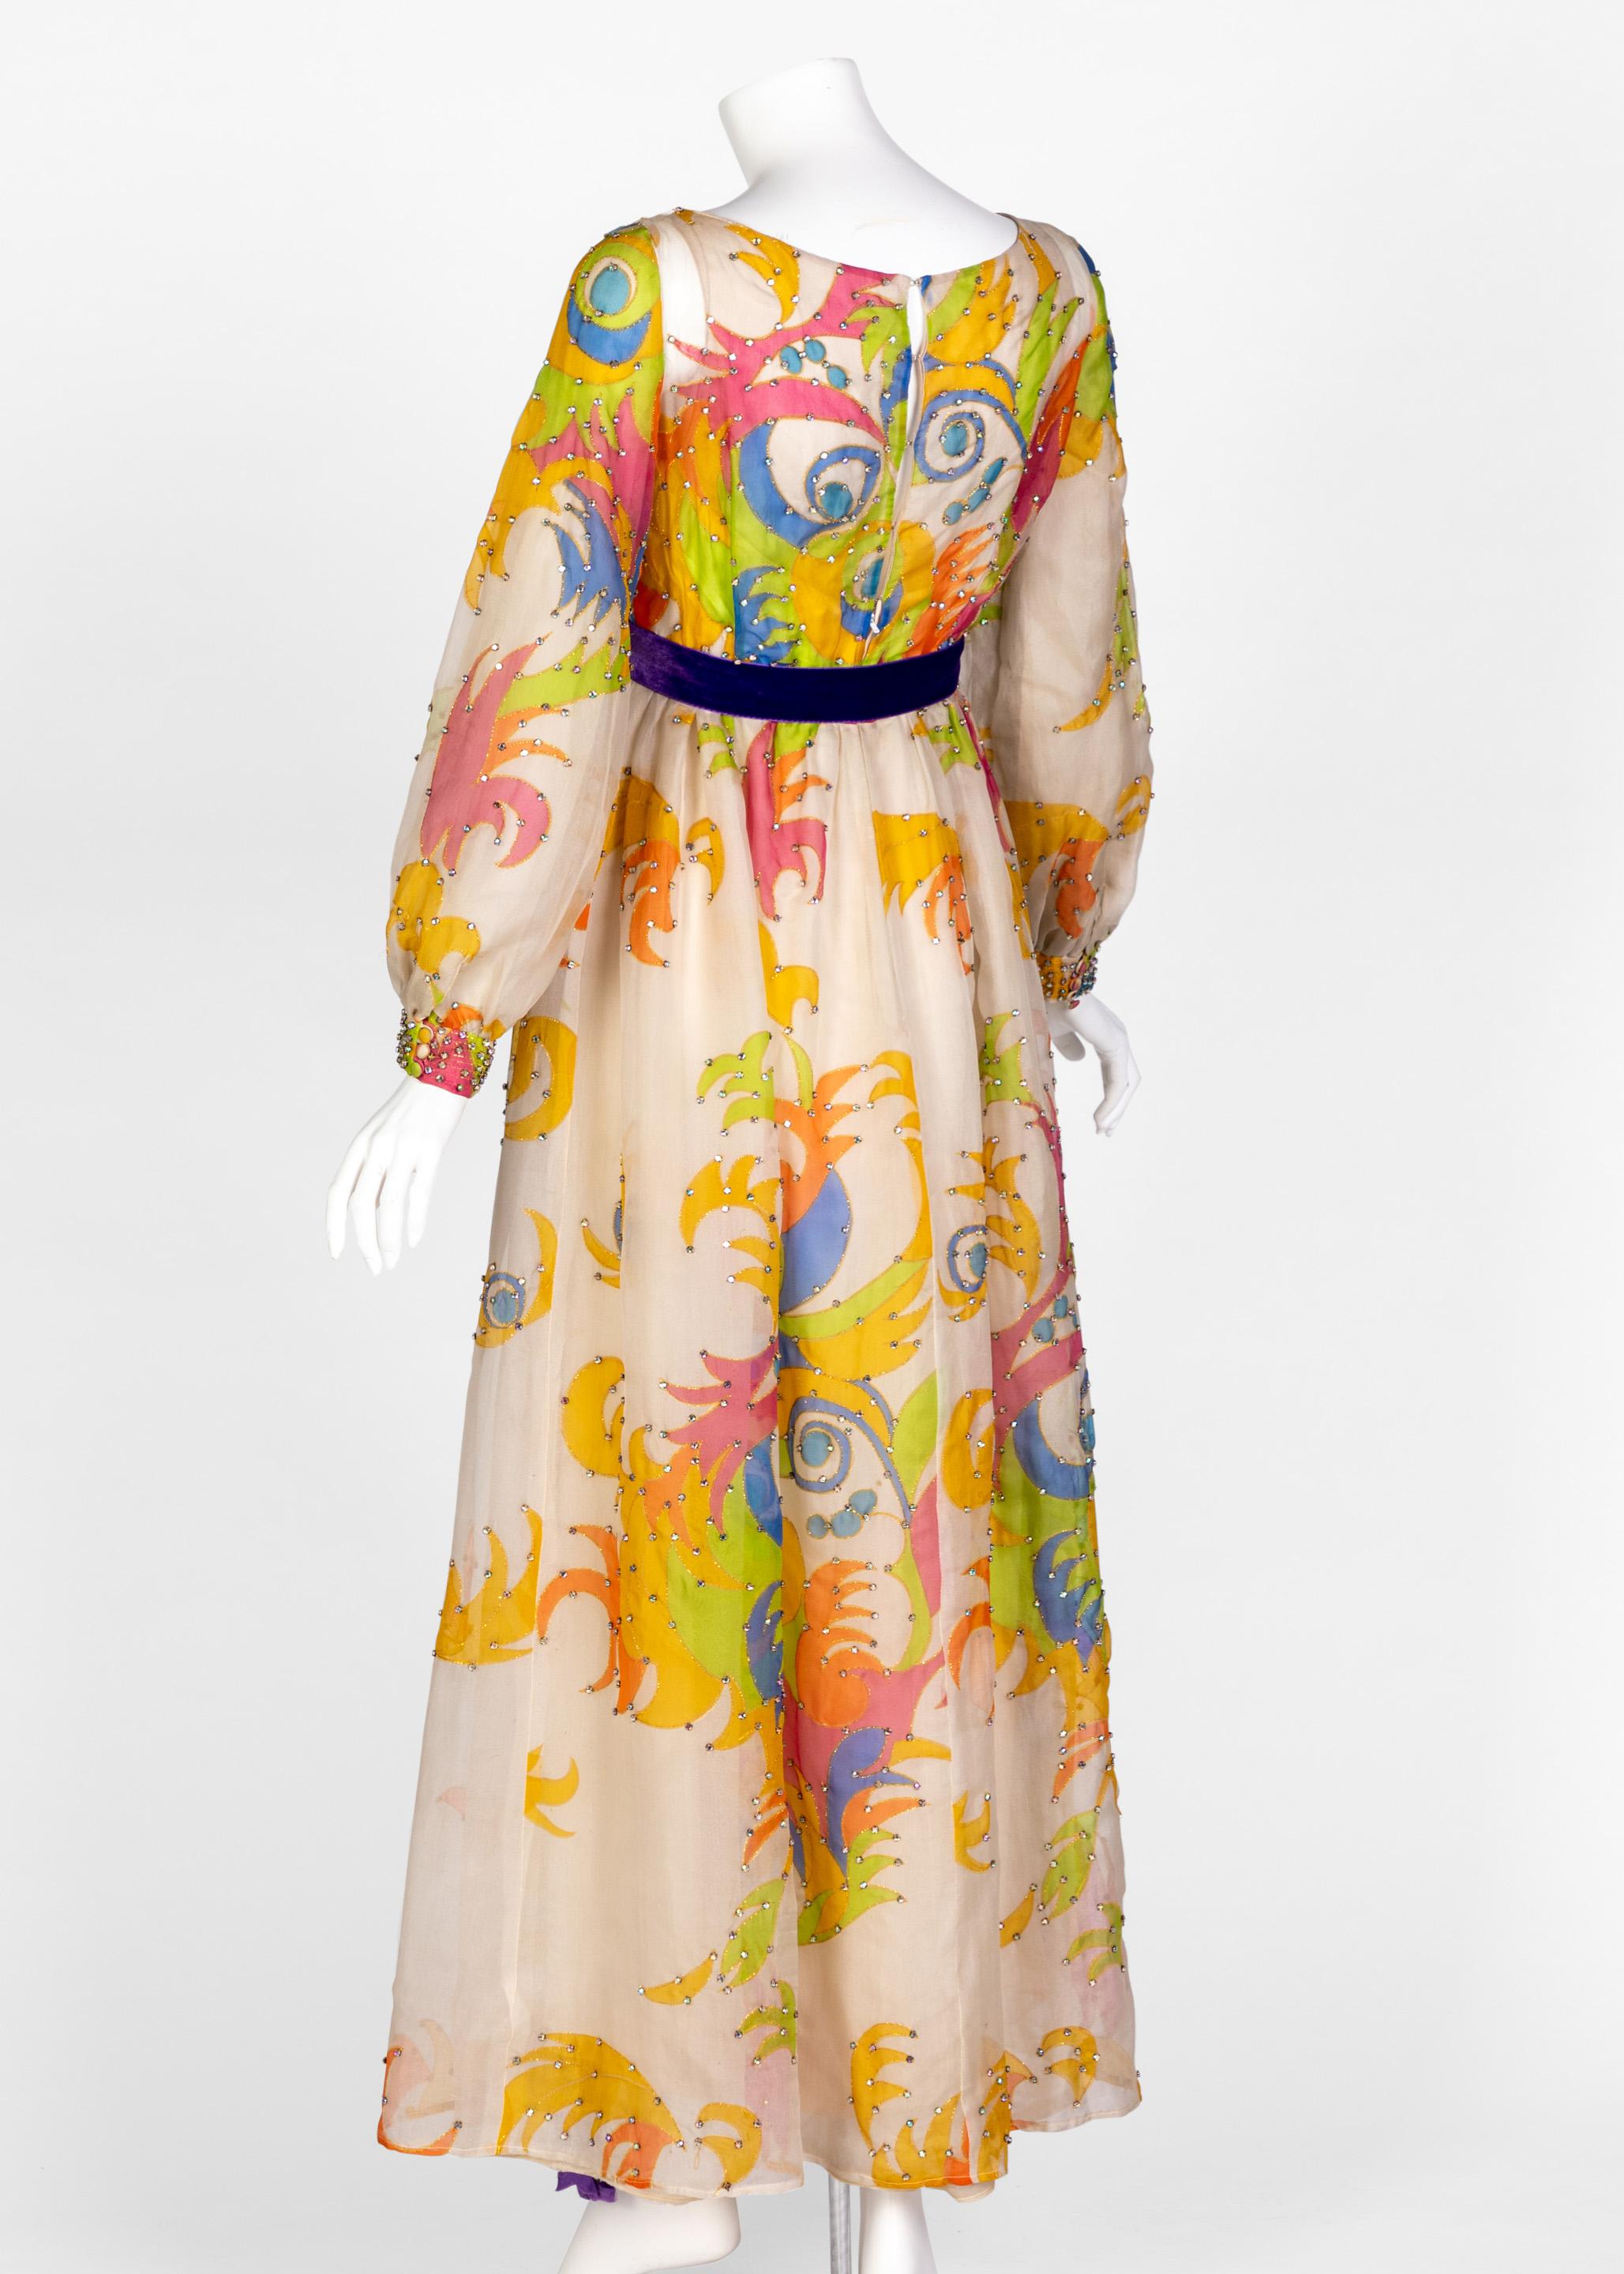 Beige Malcolm Starr Rhinestone Organza Print Dress, 1970s For Sale